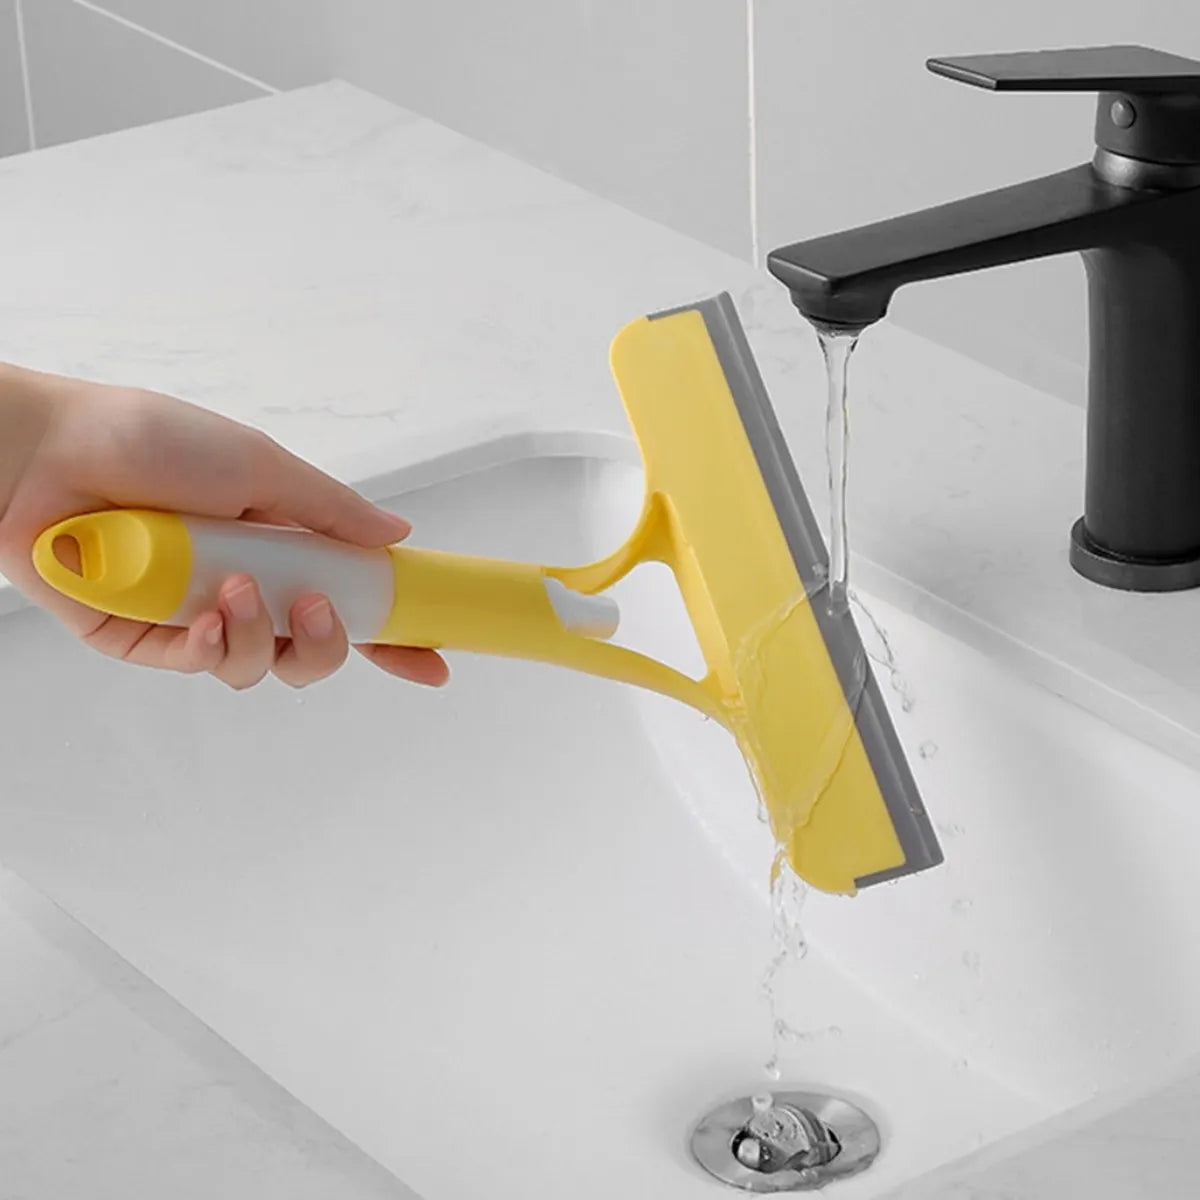 Wipe Shower Screen Cleaner Tools